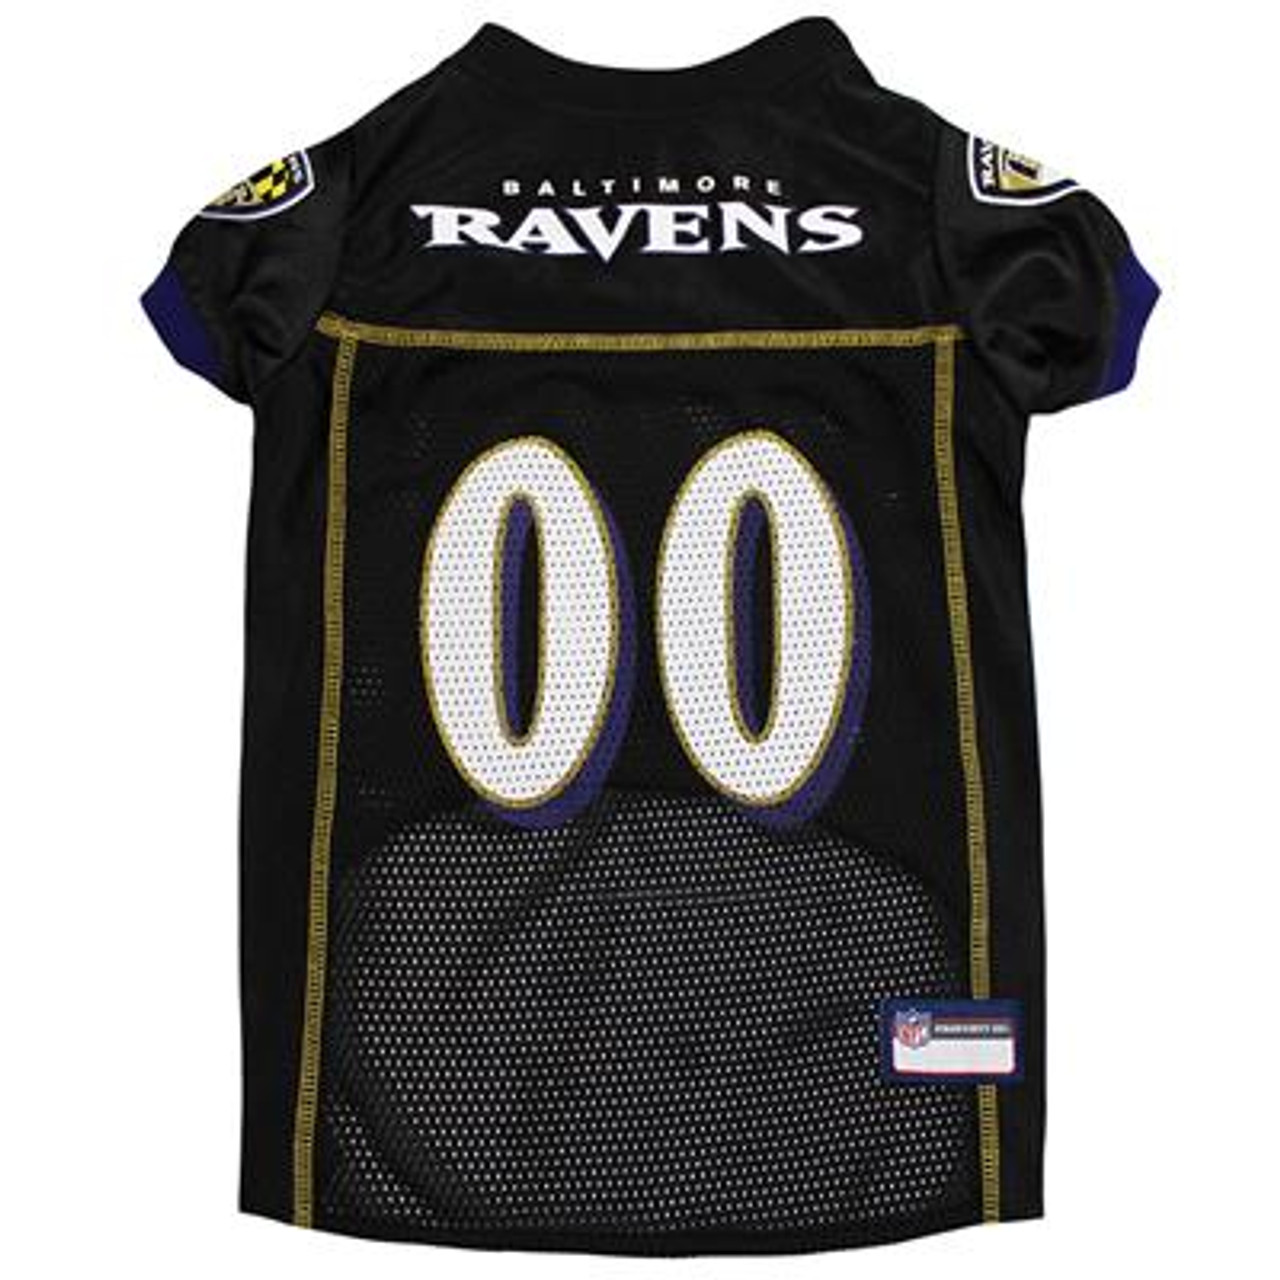 Baltimore Ravens Dog Jersey - Alternate Style